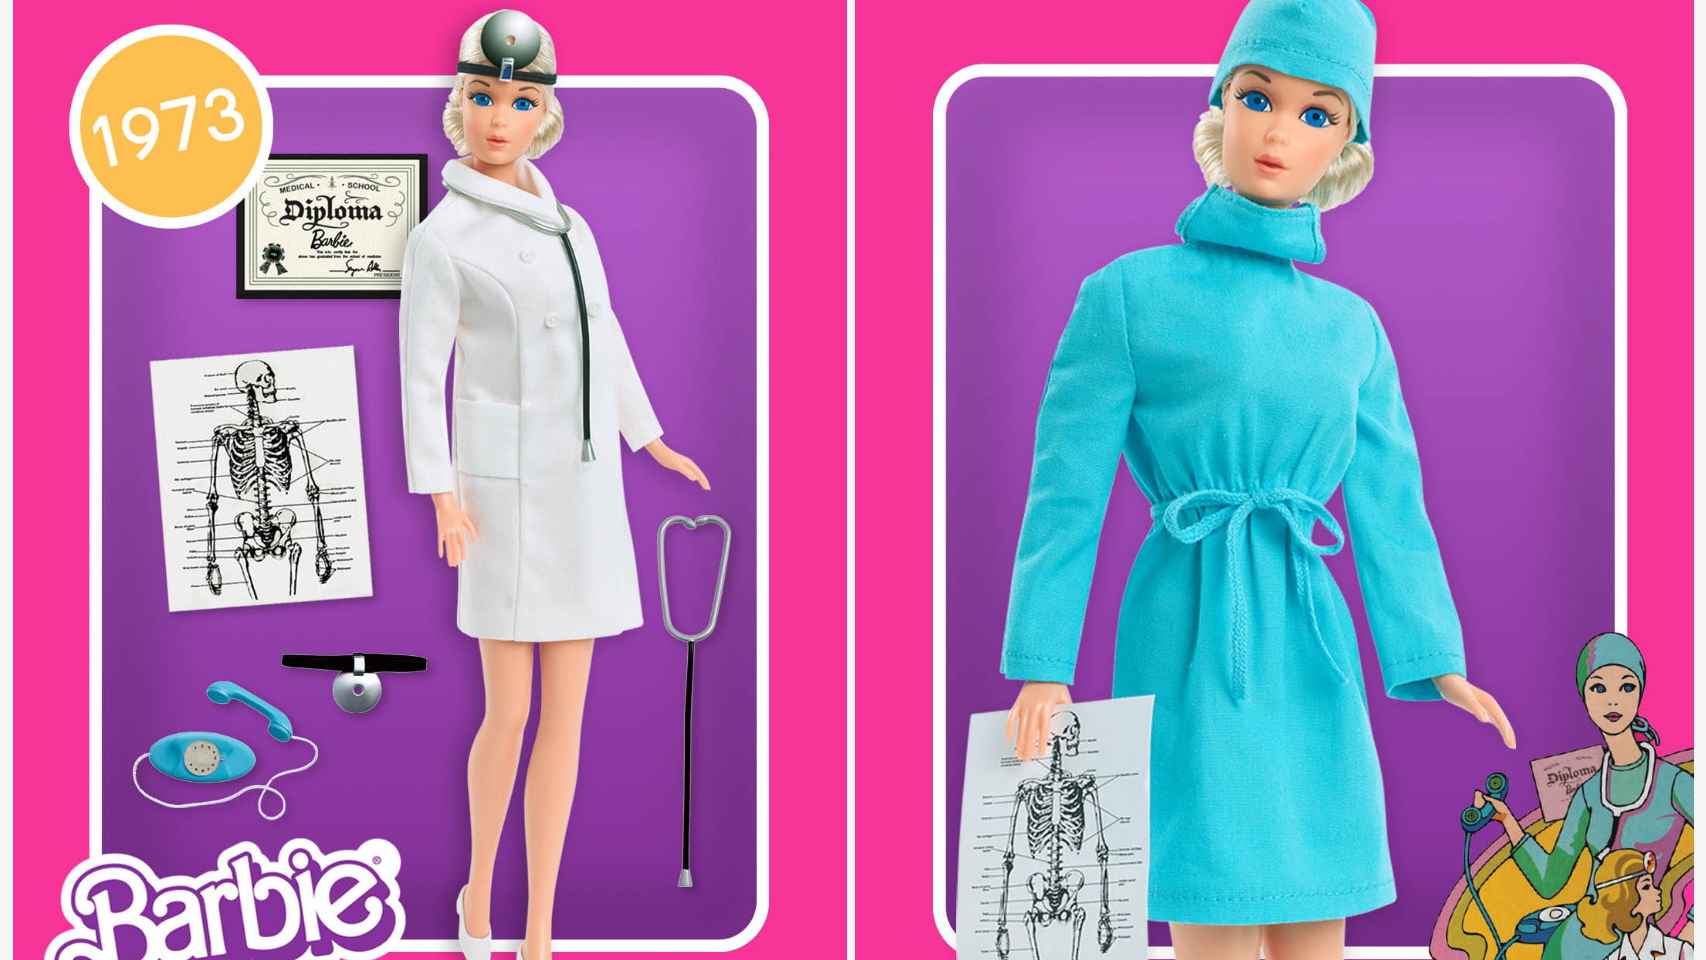 El primer modelo de Barbie doctora se remonta a 1973. Mattel.